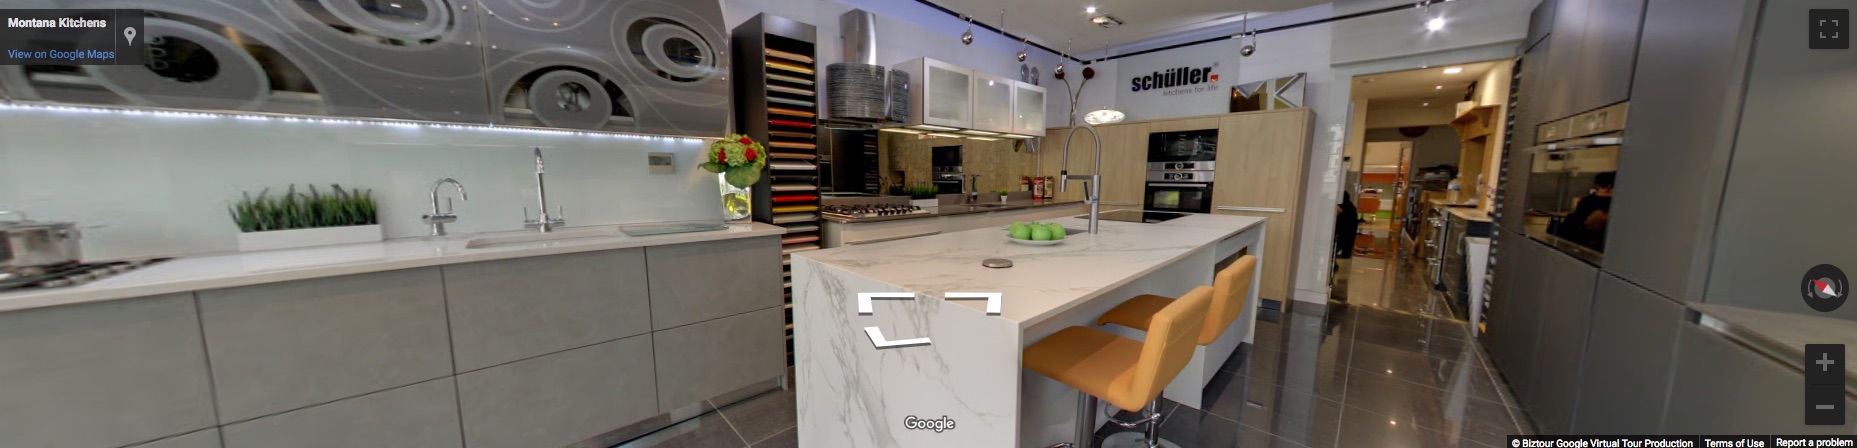 Montana-Kitchens-Showroom-Google-walkthrough